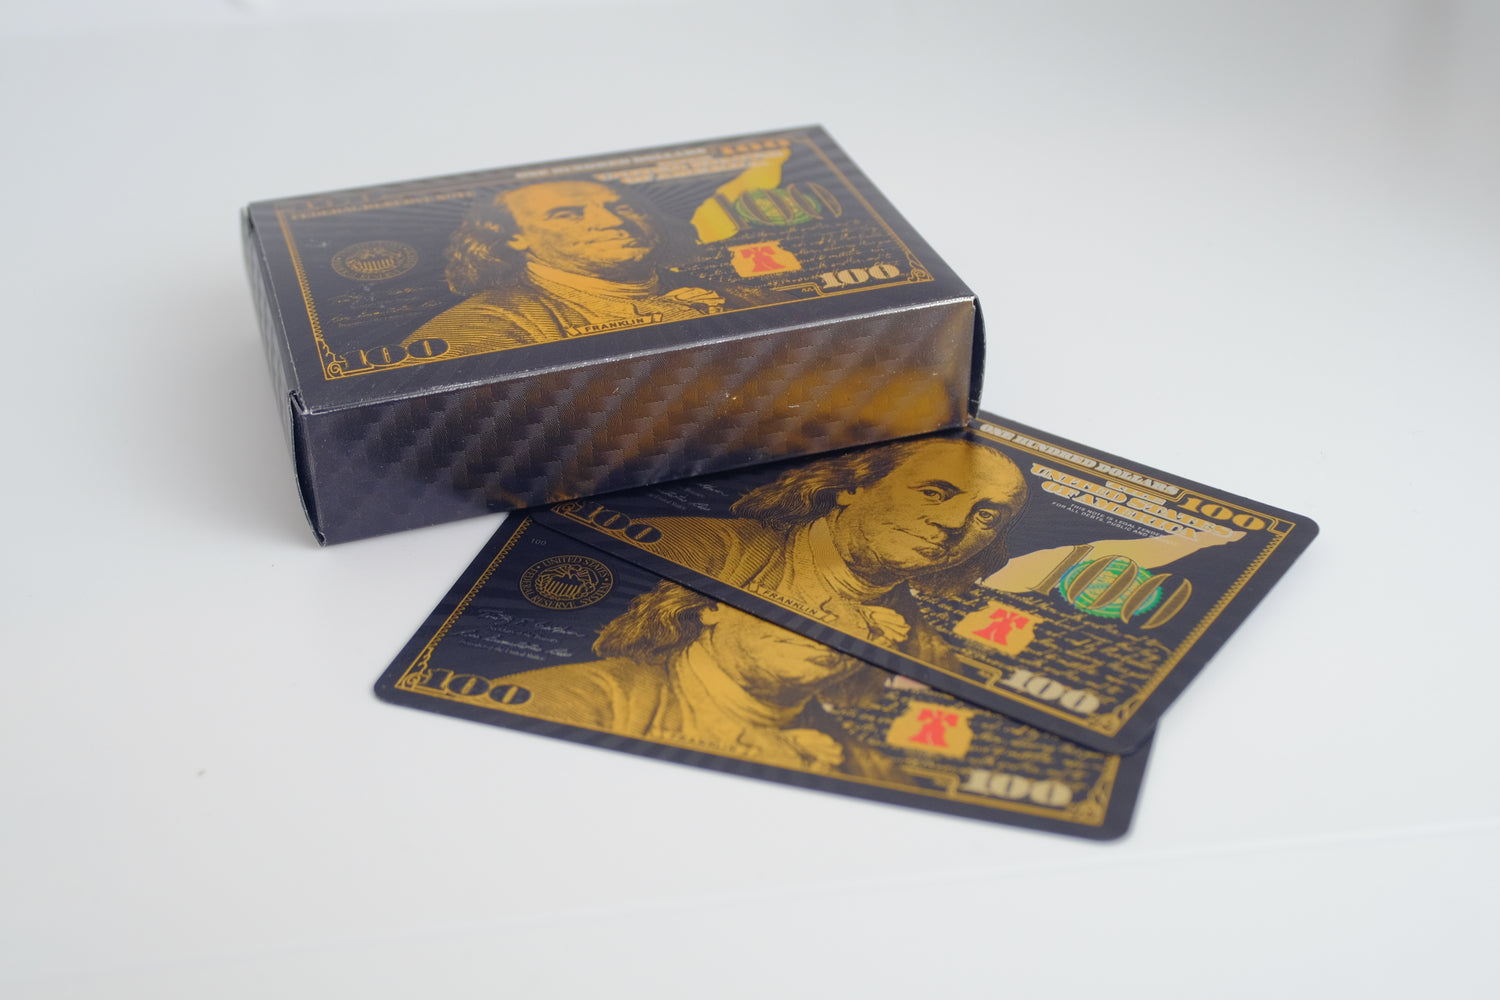 13x23mm 24k Shiny Gold Playing Card Charm Enamel Playing Card 